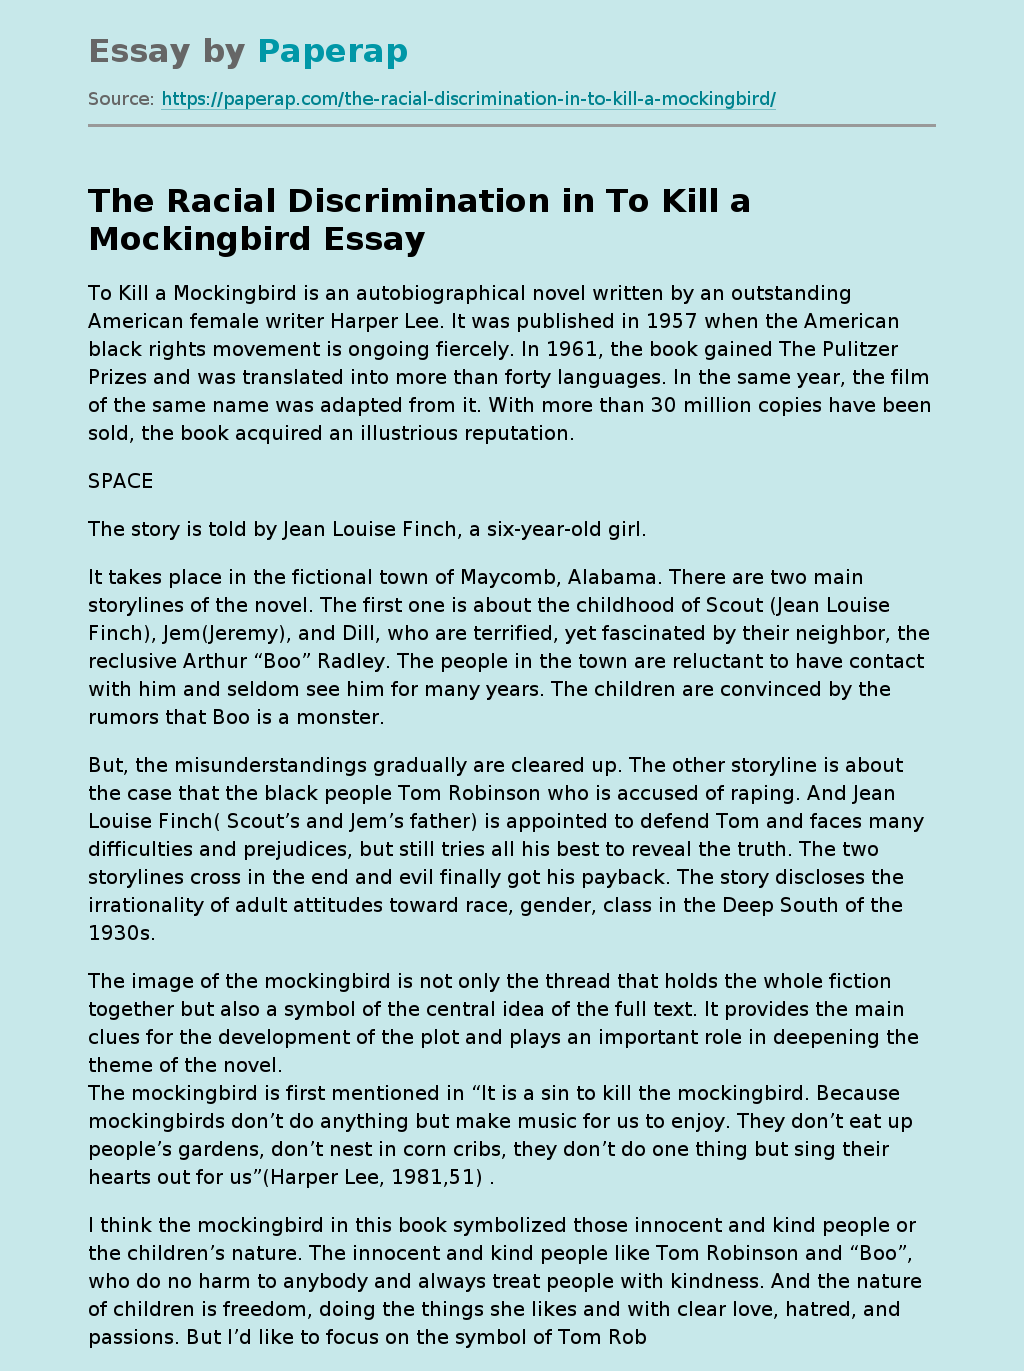 The Racial Discrimination in To Kill a Mockingbird